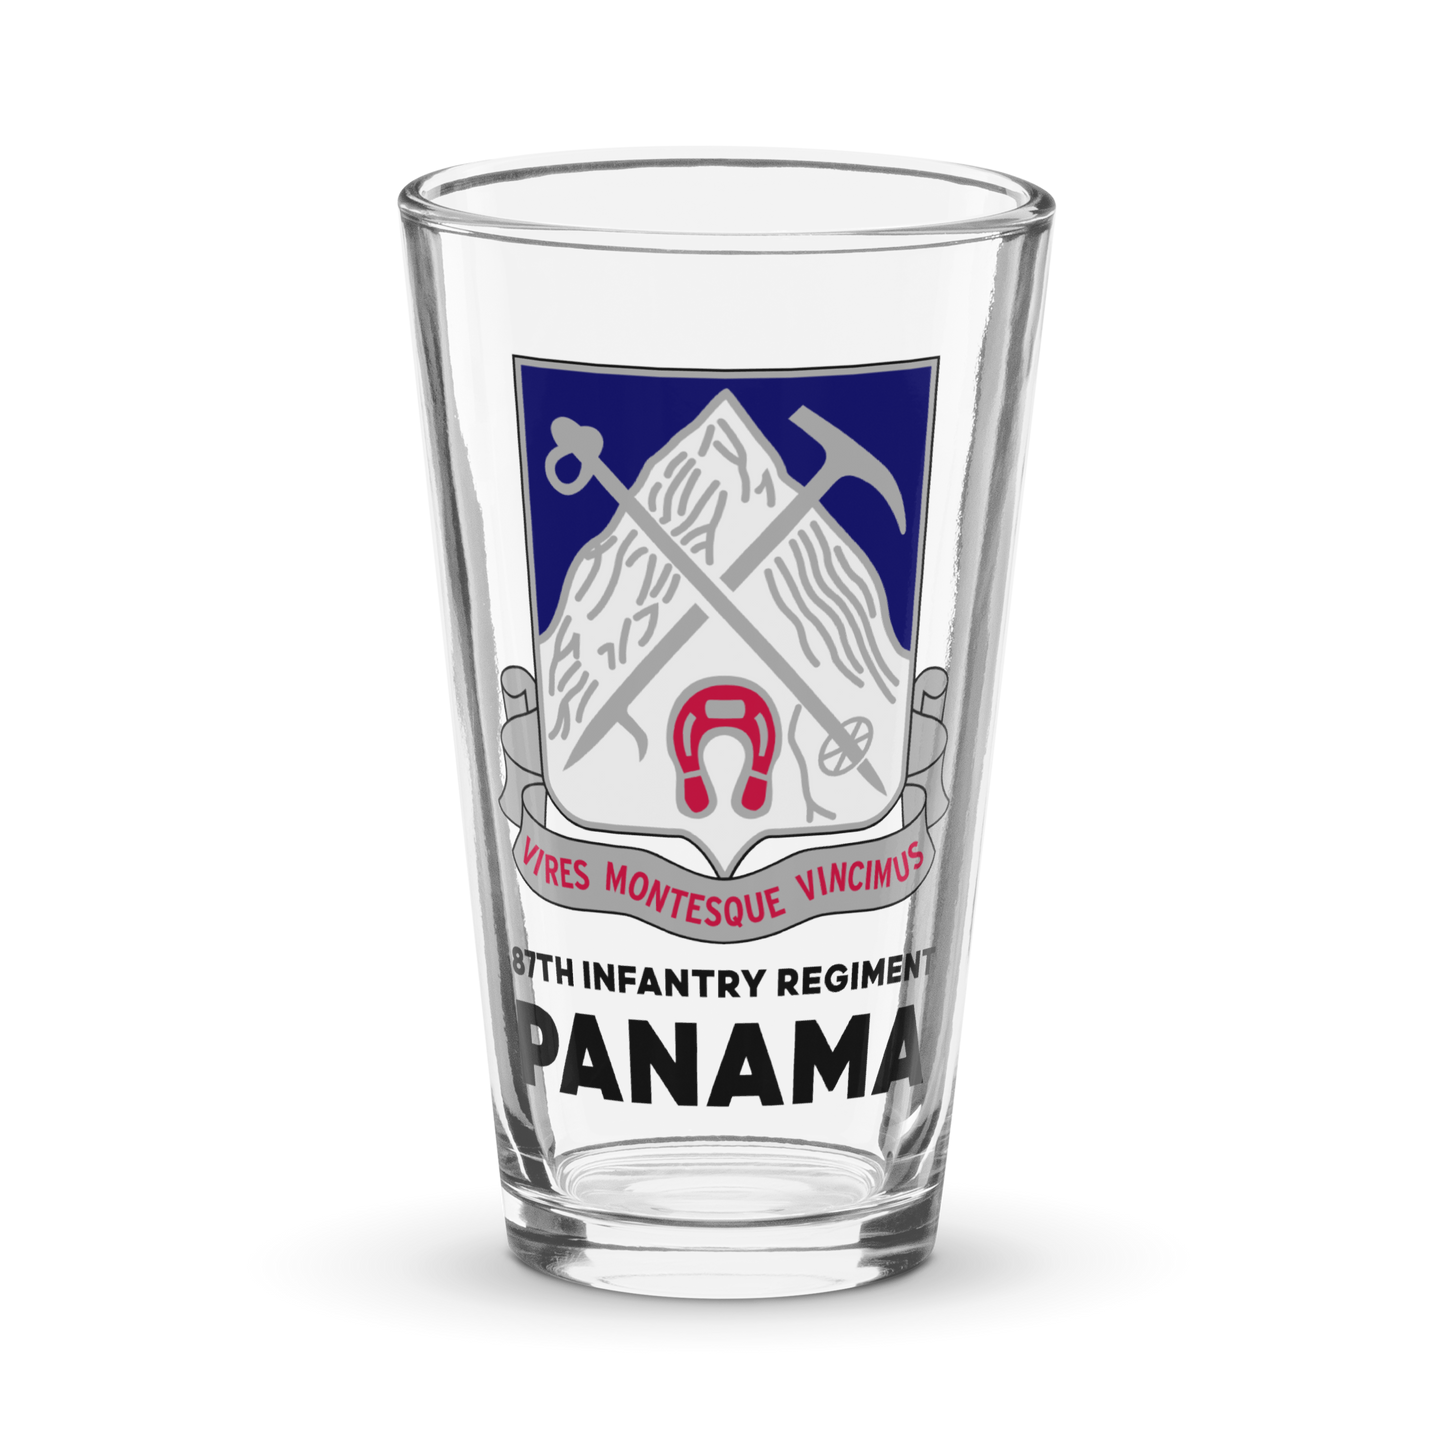 87th Infantry Regiment Panama Pint Glass